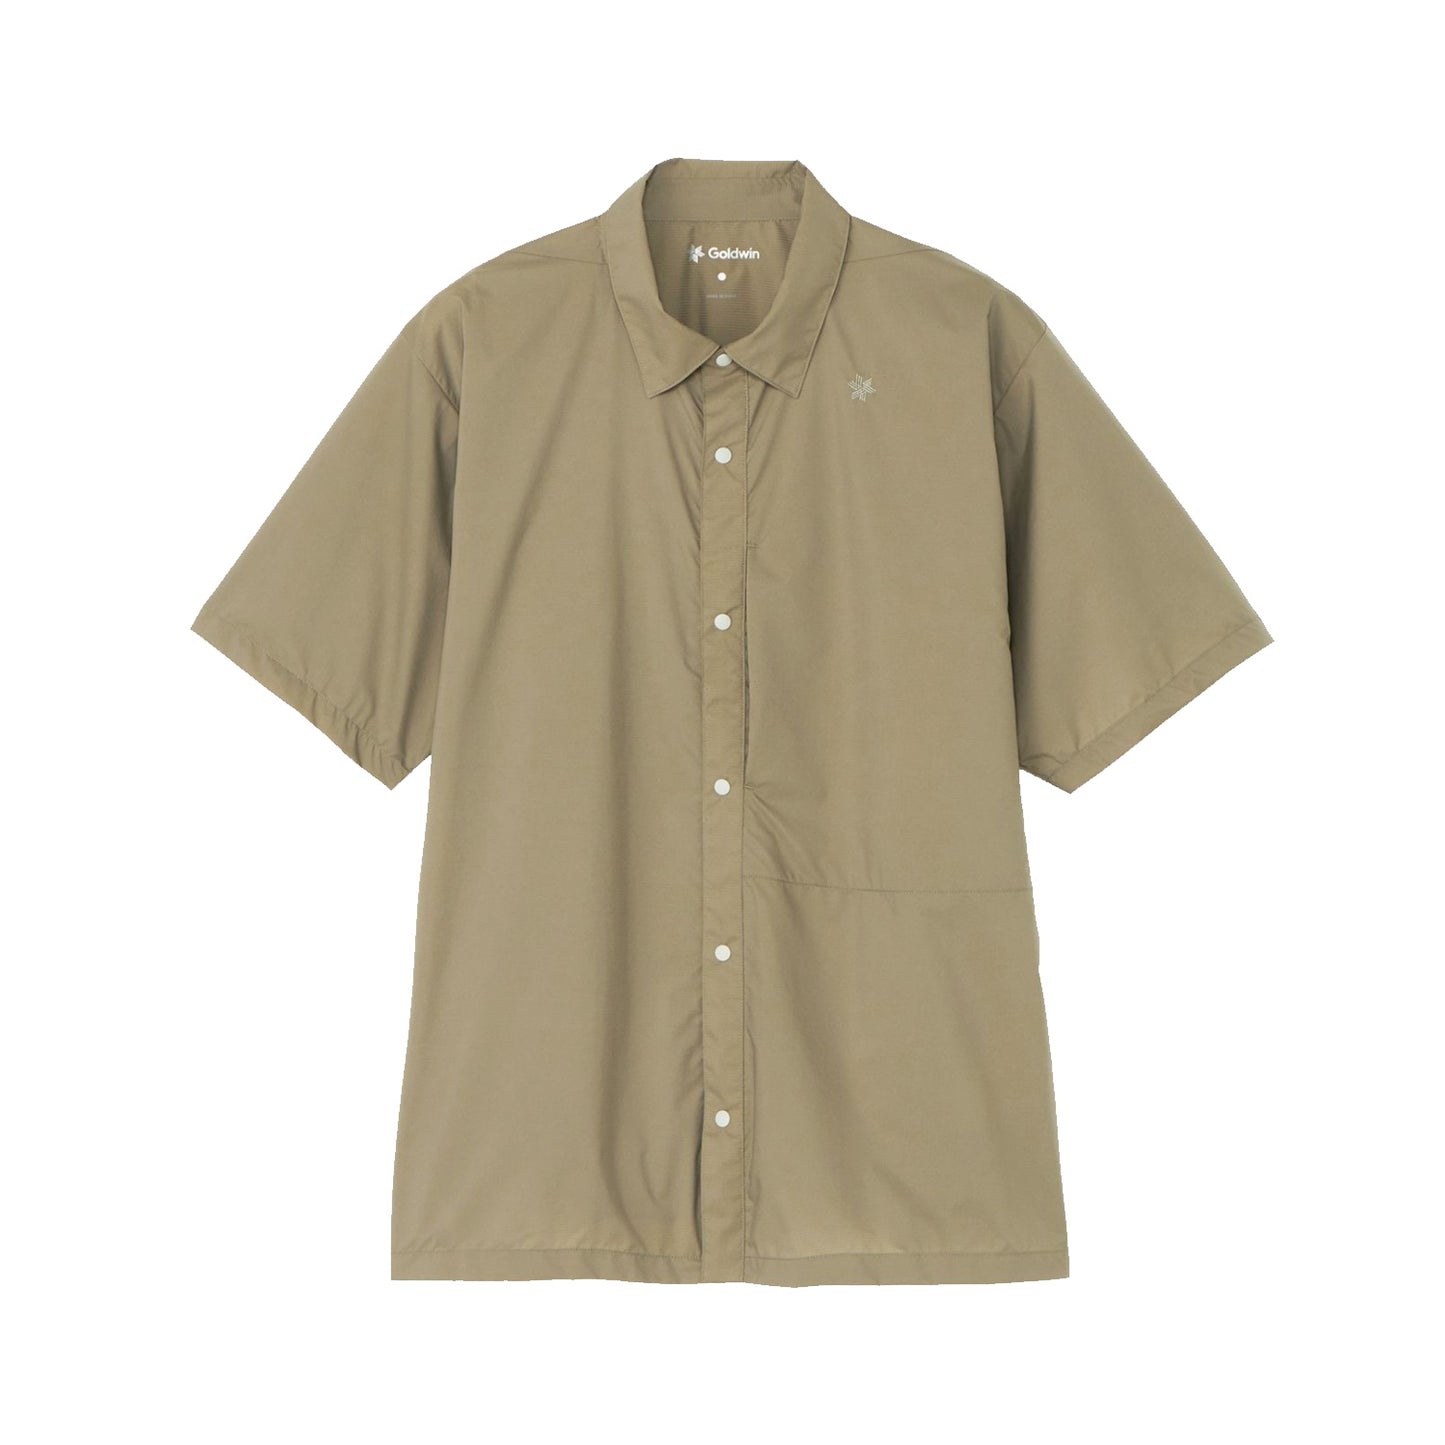 GOLDWIN(ゴールドウイン) Pertex Double Cloth S/S Hike Shirt GM54105